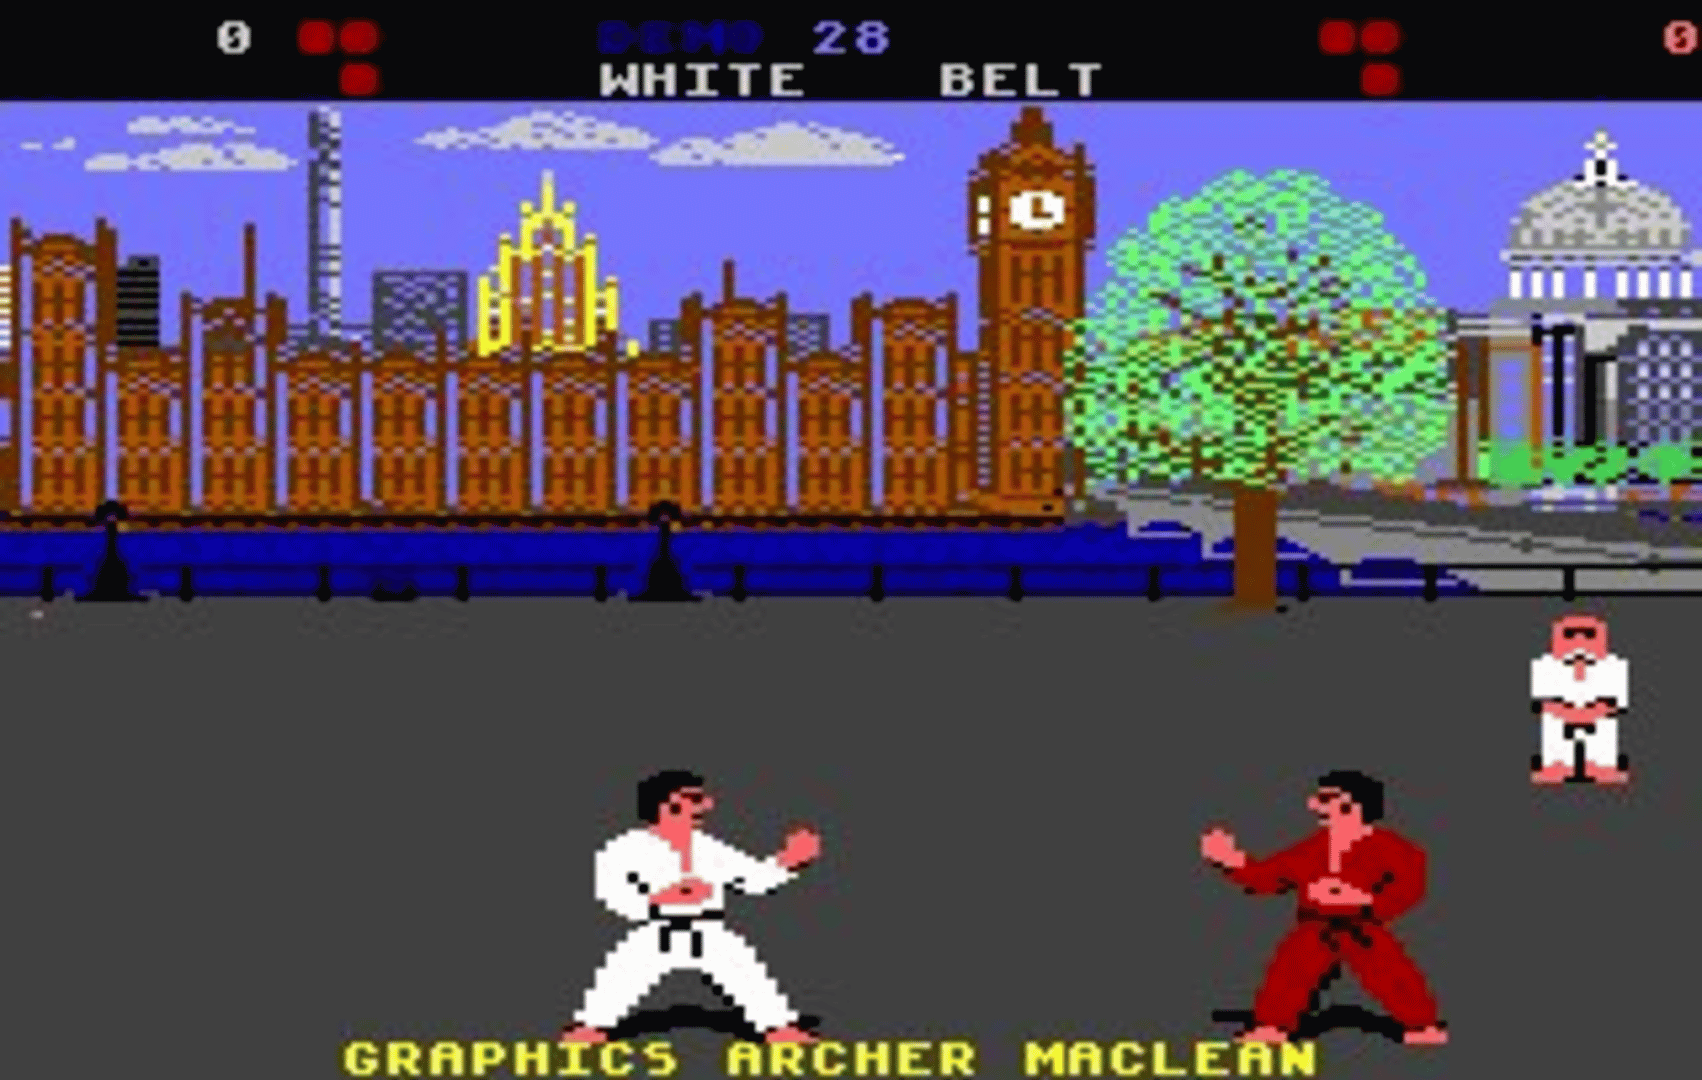 World Karate Championship screenshot